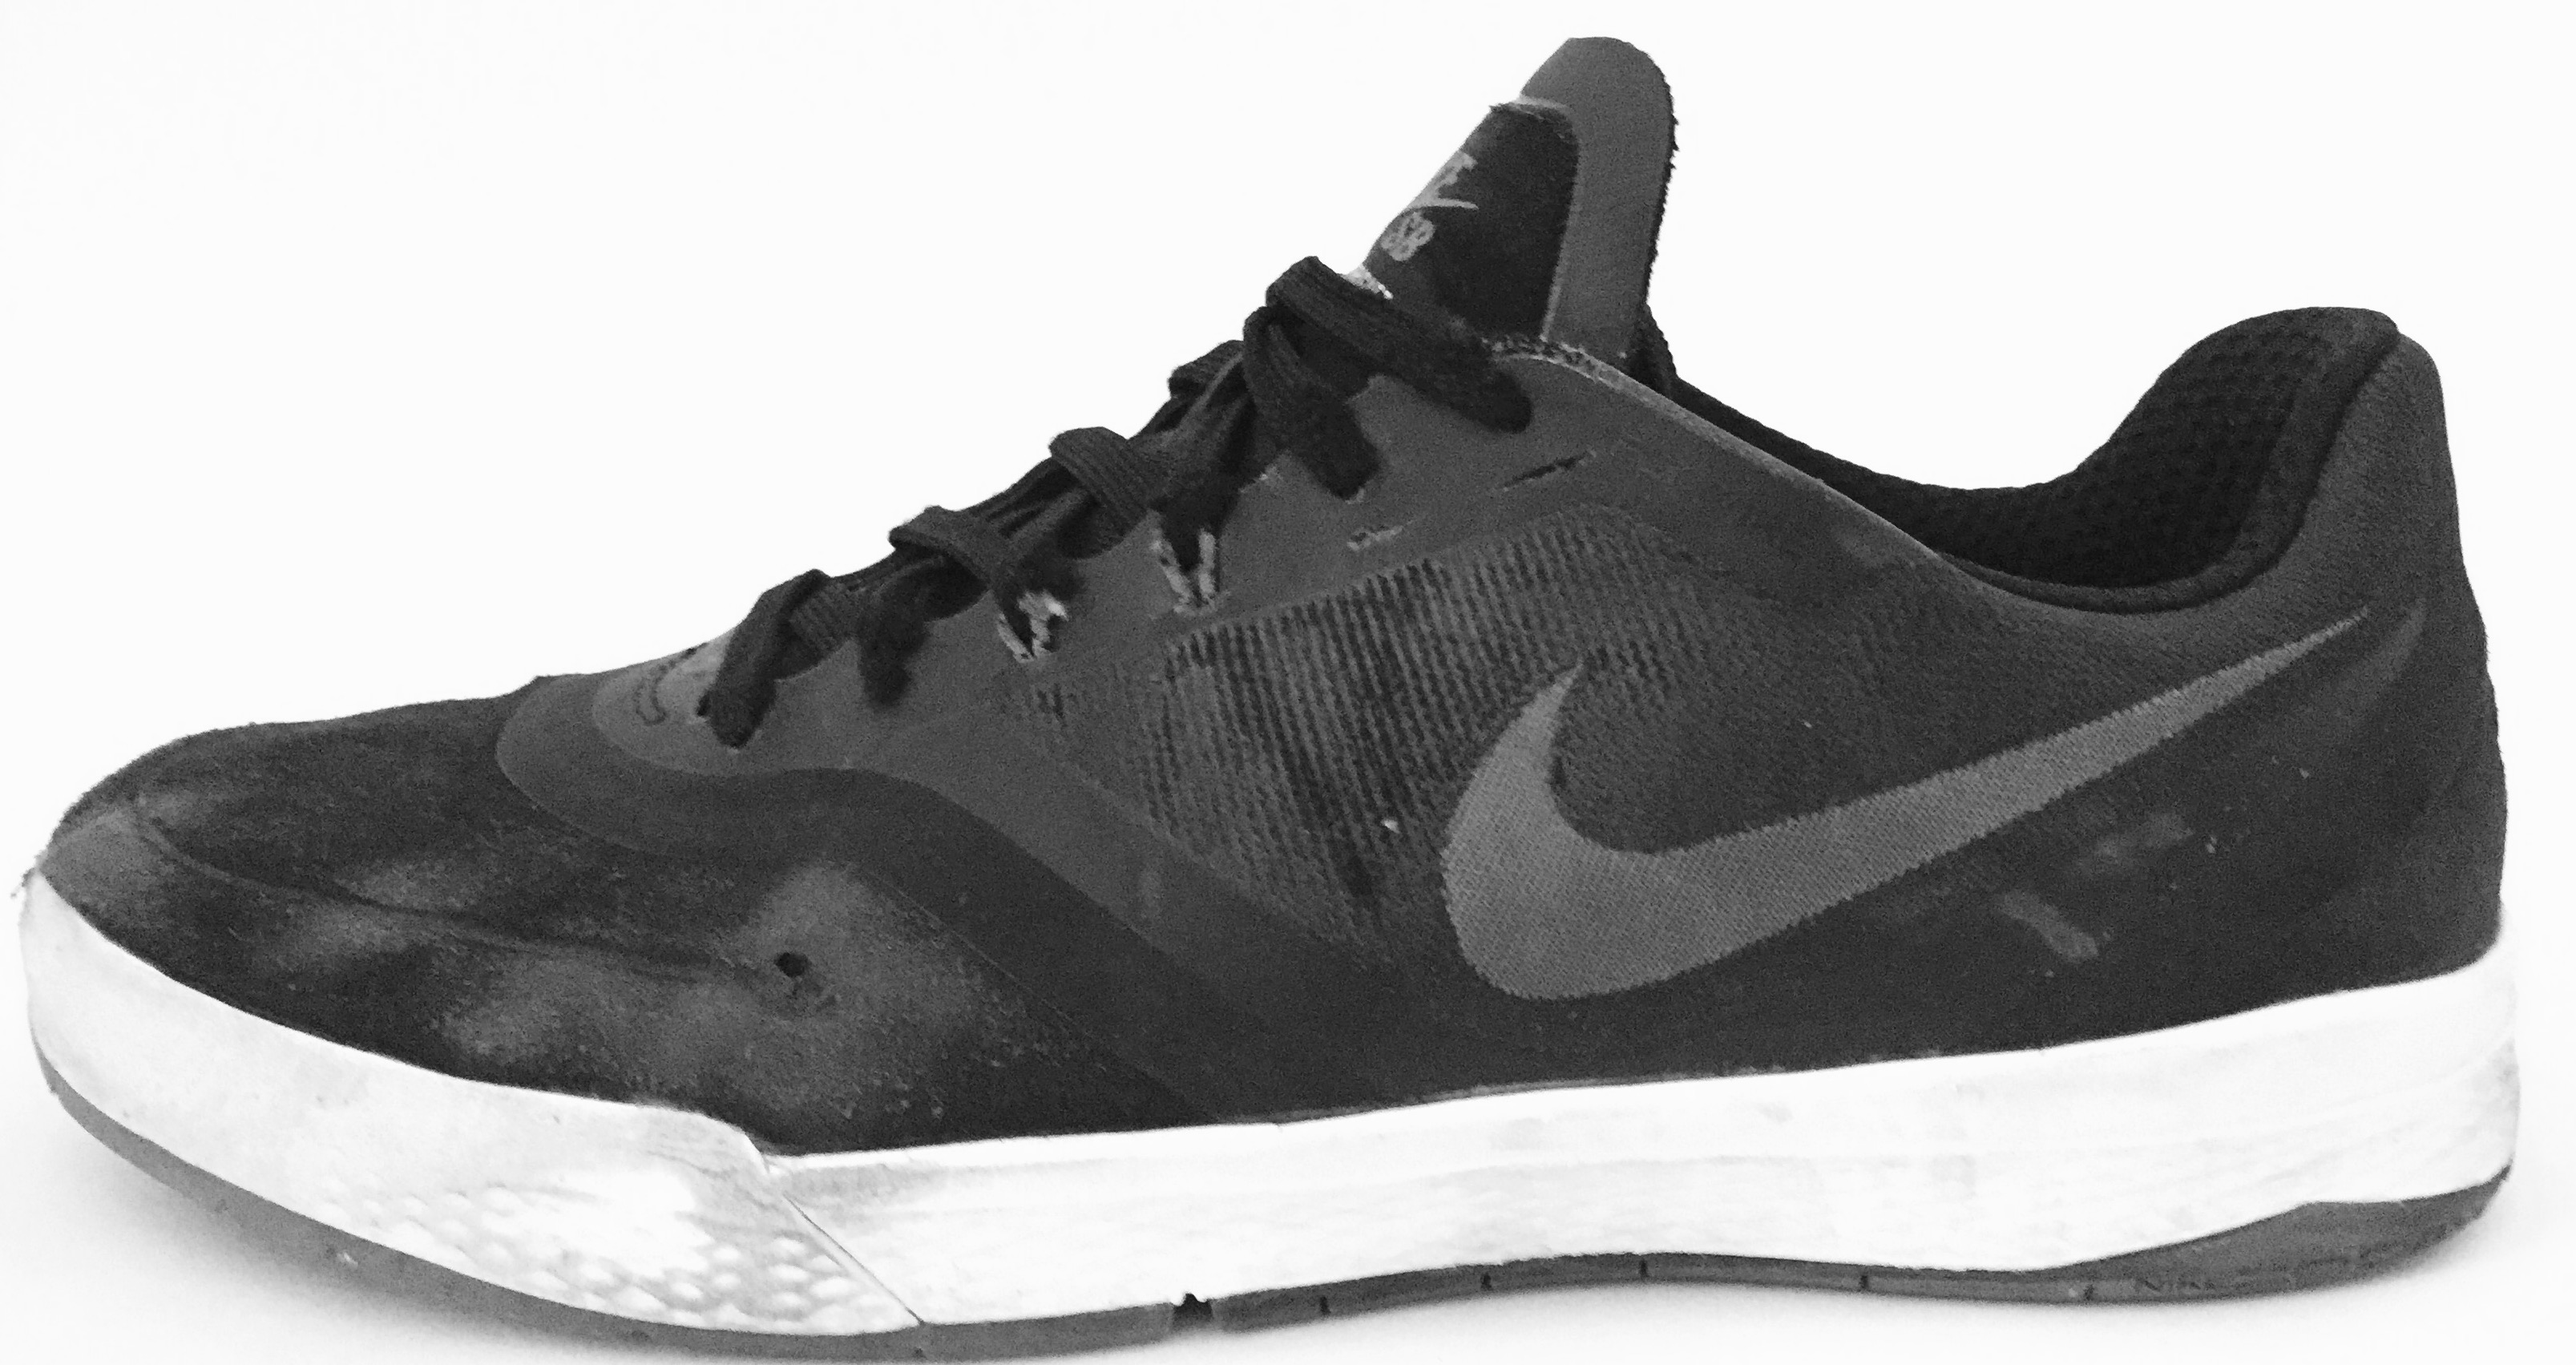 nike paul rodriguez 7 2015 Nike online – Compra productos Nike baratos